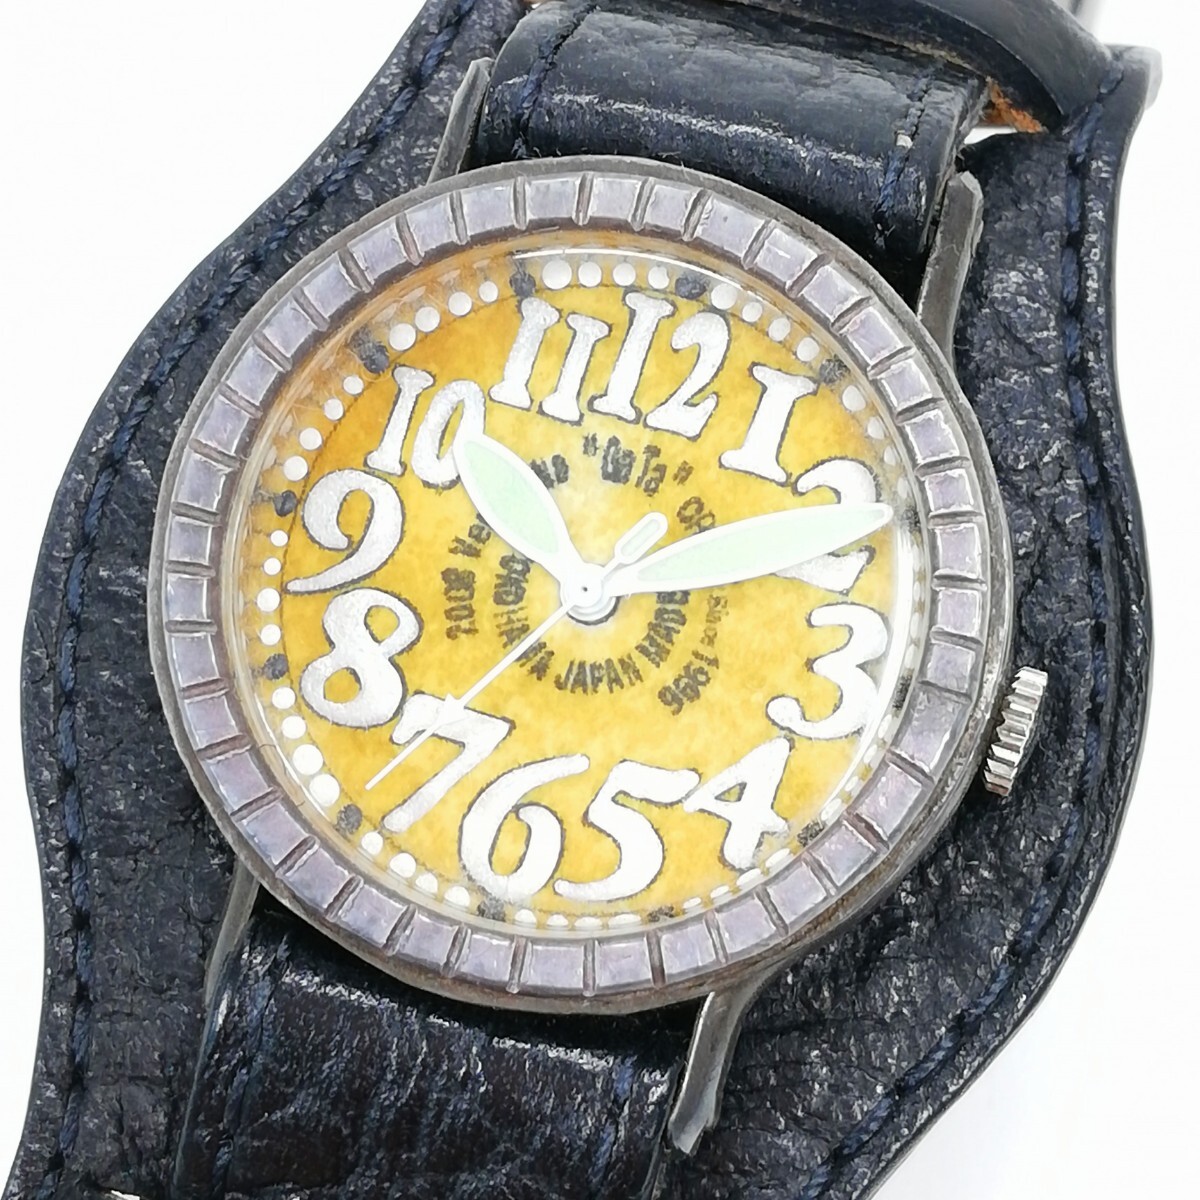 231 GaTa 手表史密斯 GaTa 手工腕表模拟石英仿古风格手工男士黄色表盘操作未确认, 模拟(石英类型), 3针(小时, 分钟, 秒), 其他的